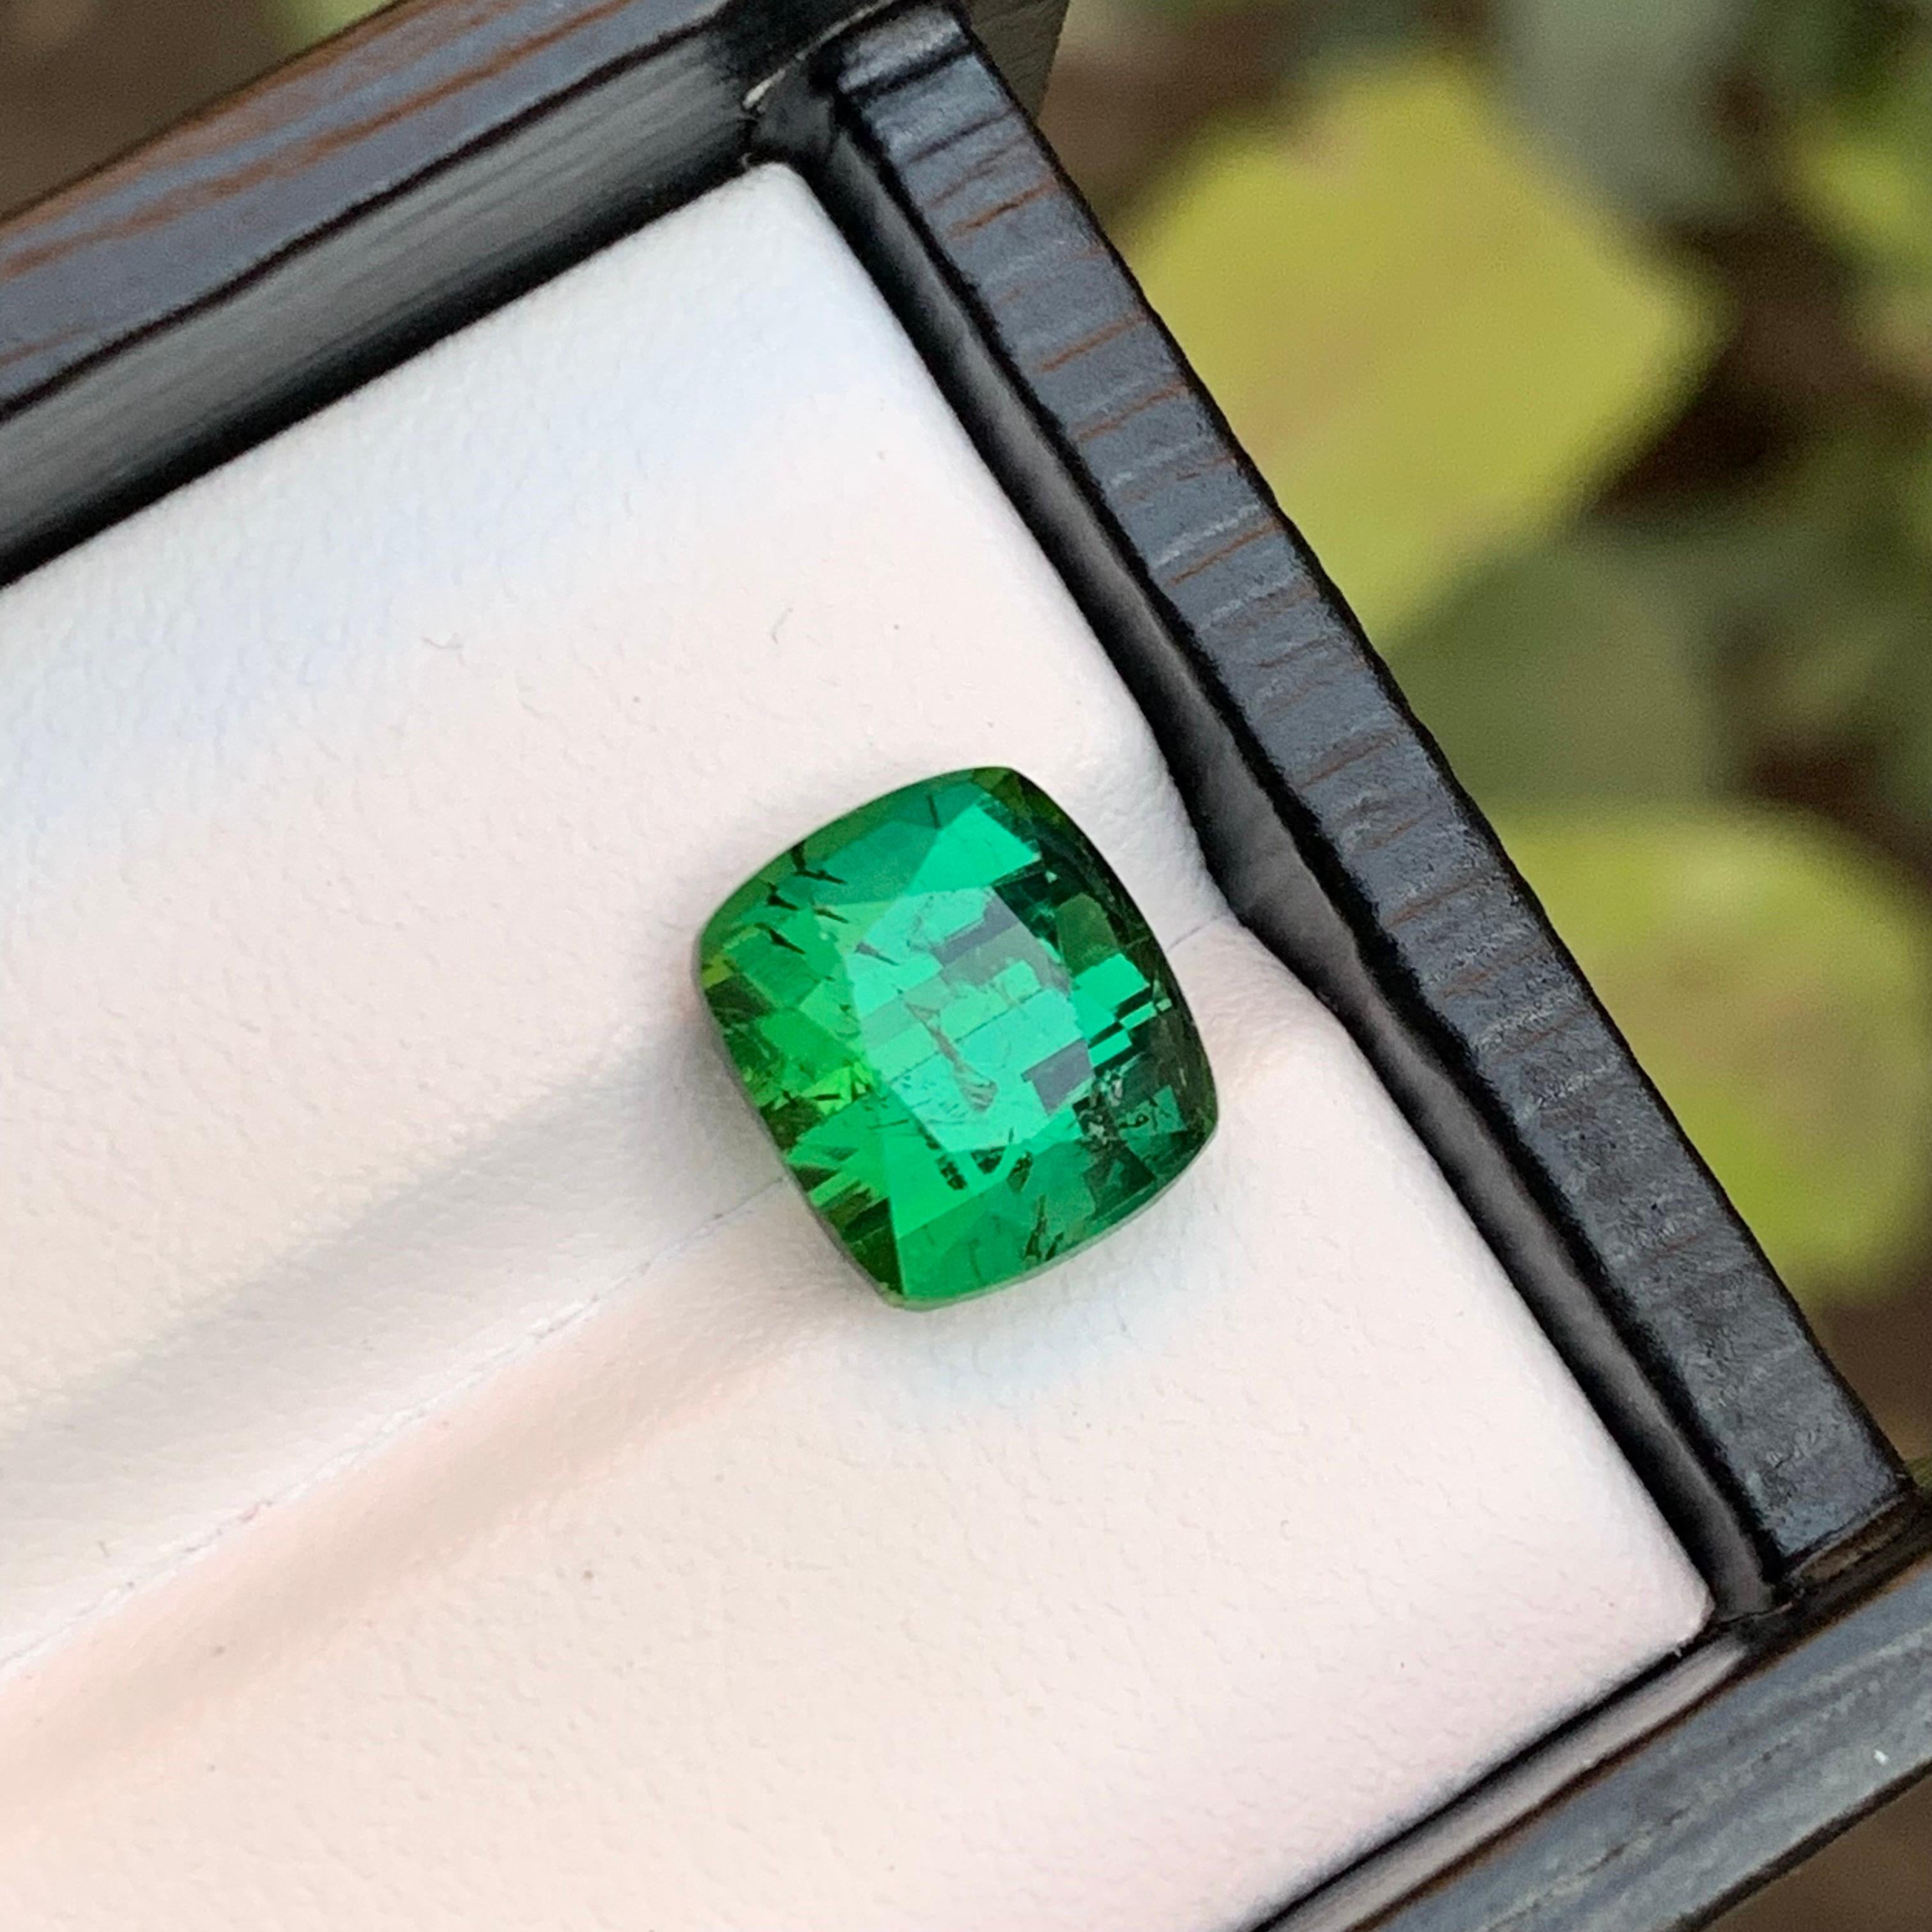 Contemporary Rare Green Cushion Cut Natural Tourmaline Loose Gemstone, 5.05 Carat-Afghanistan For Sale